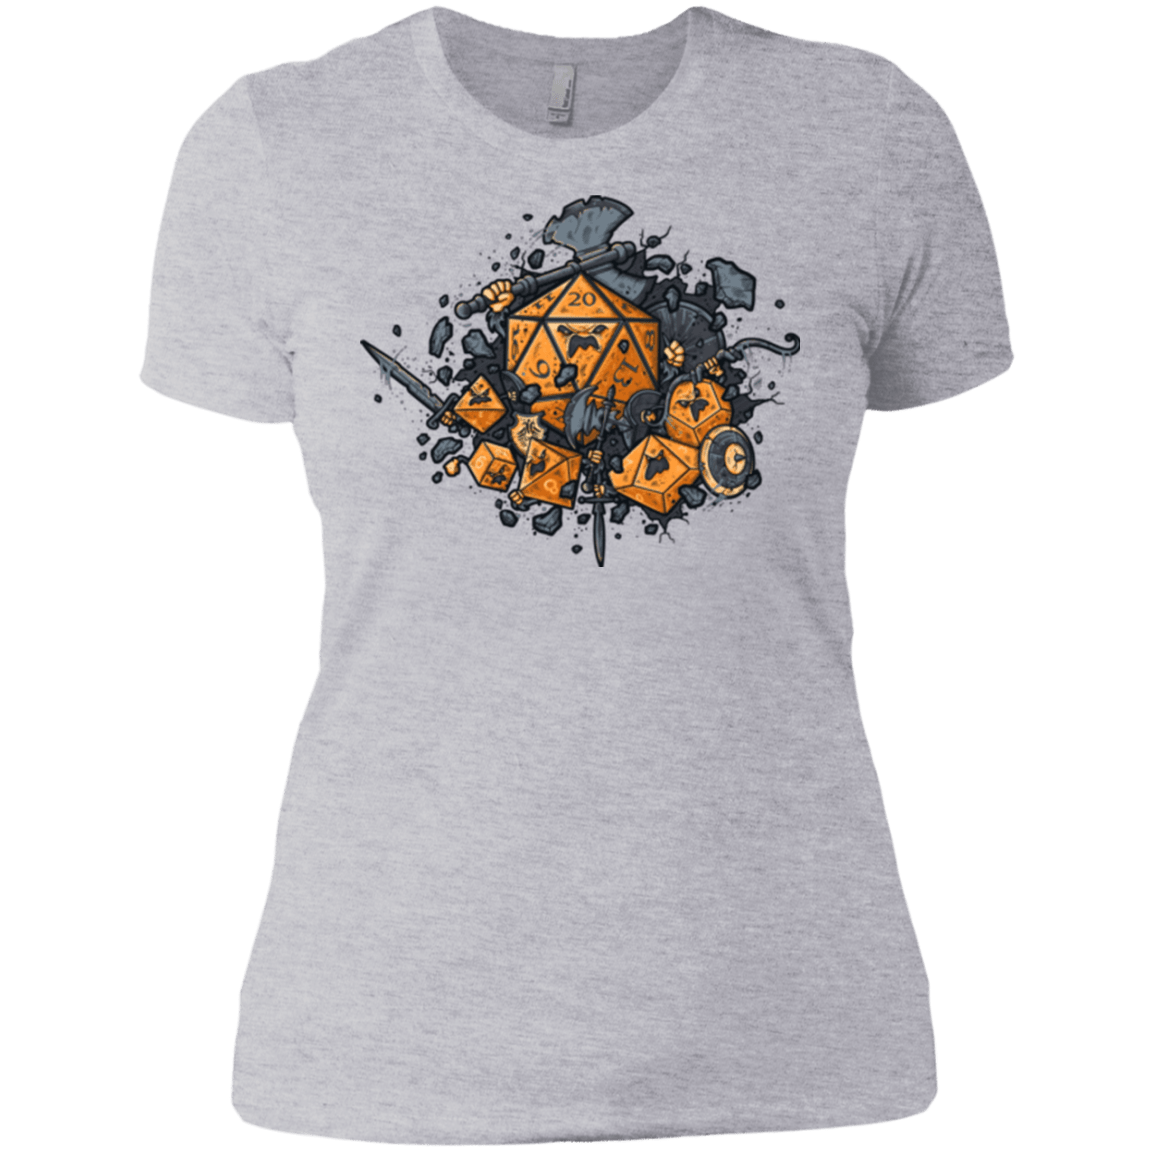 T-Shirts Heather Grey / X-Small RPG UNITED Women's Premium T-Shirt